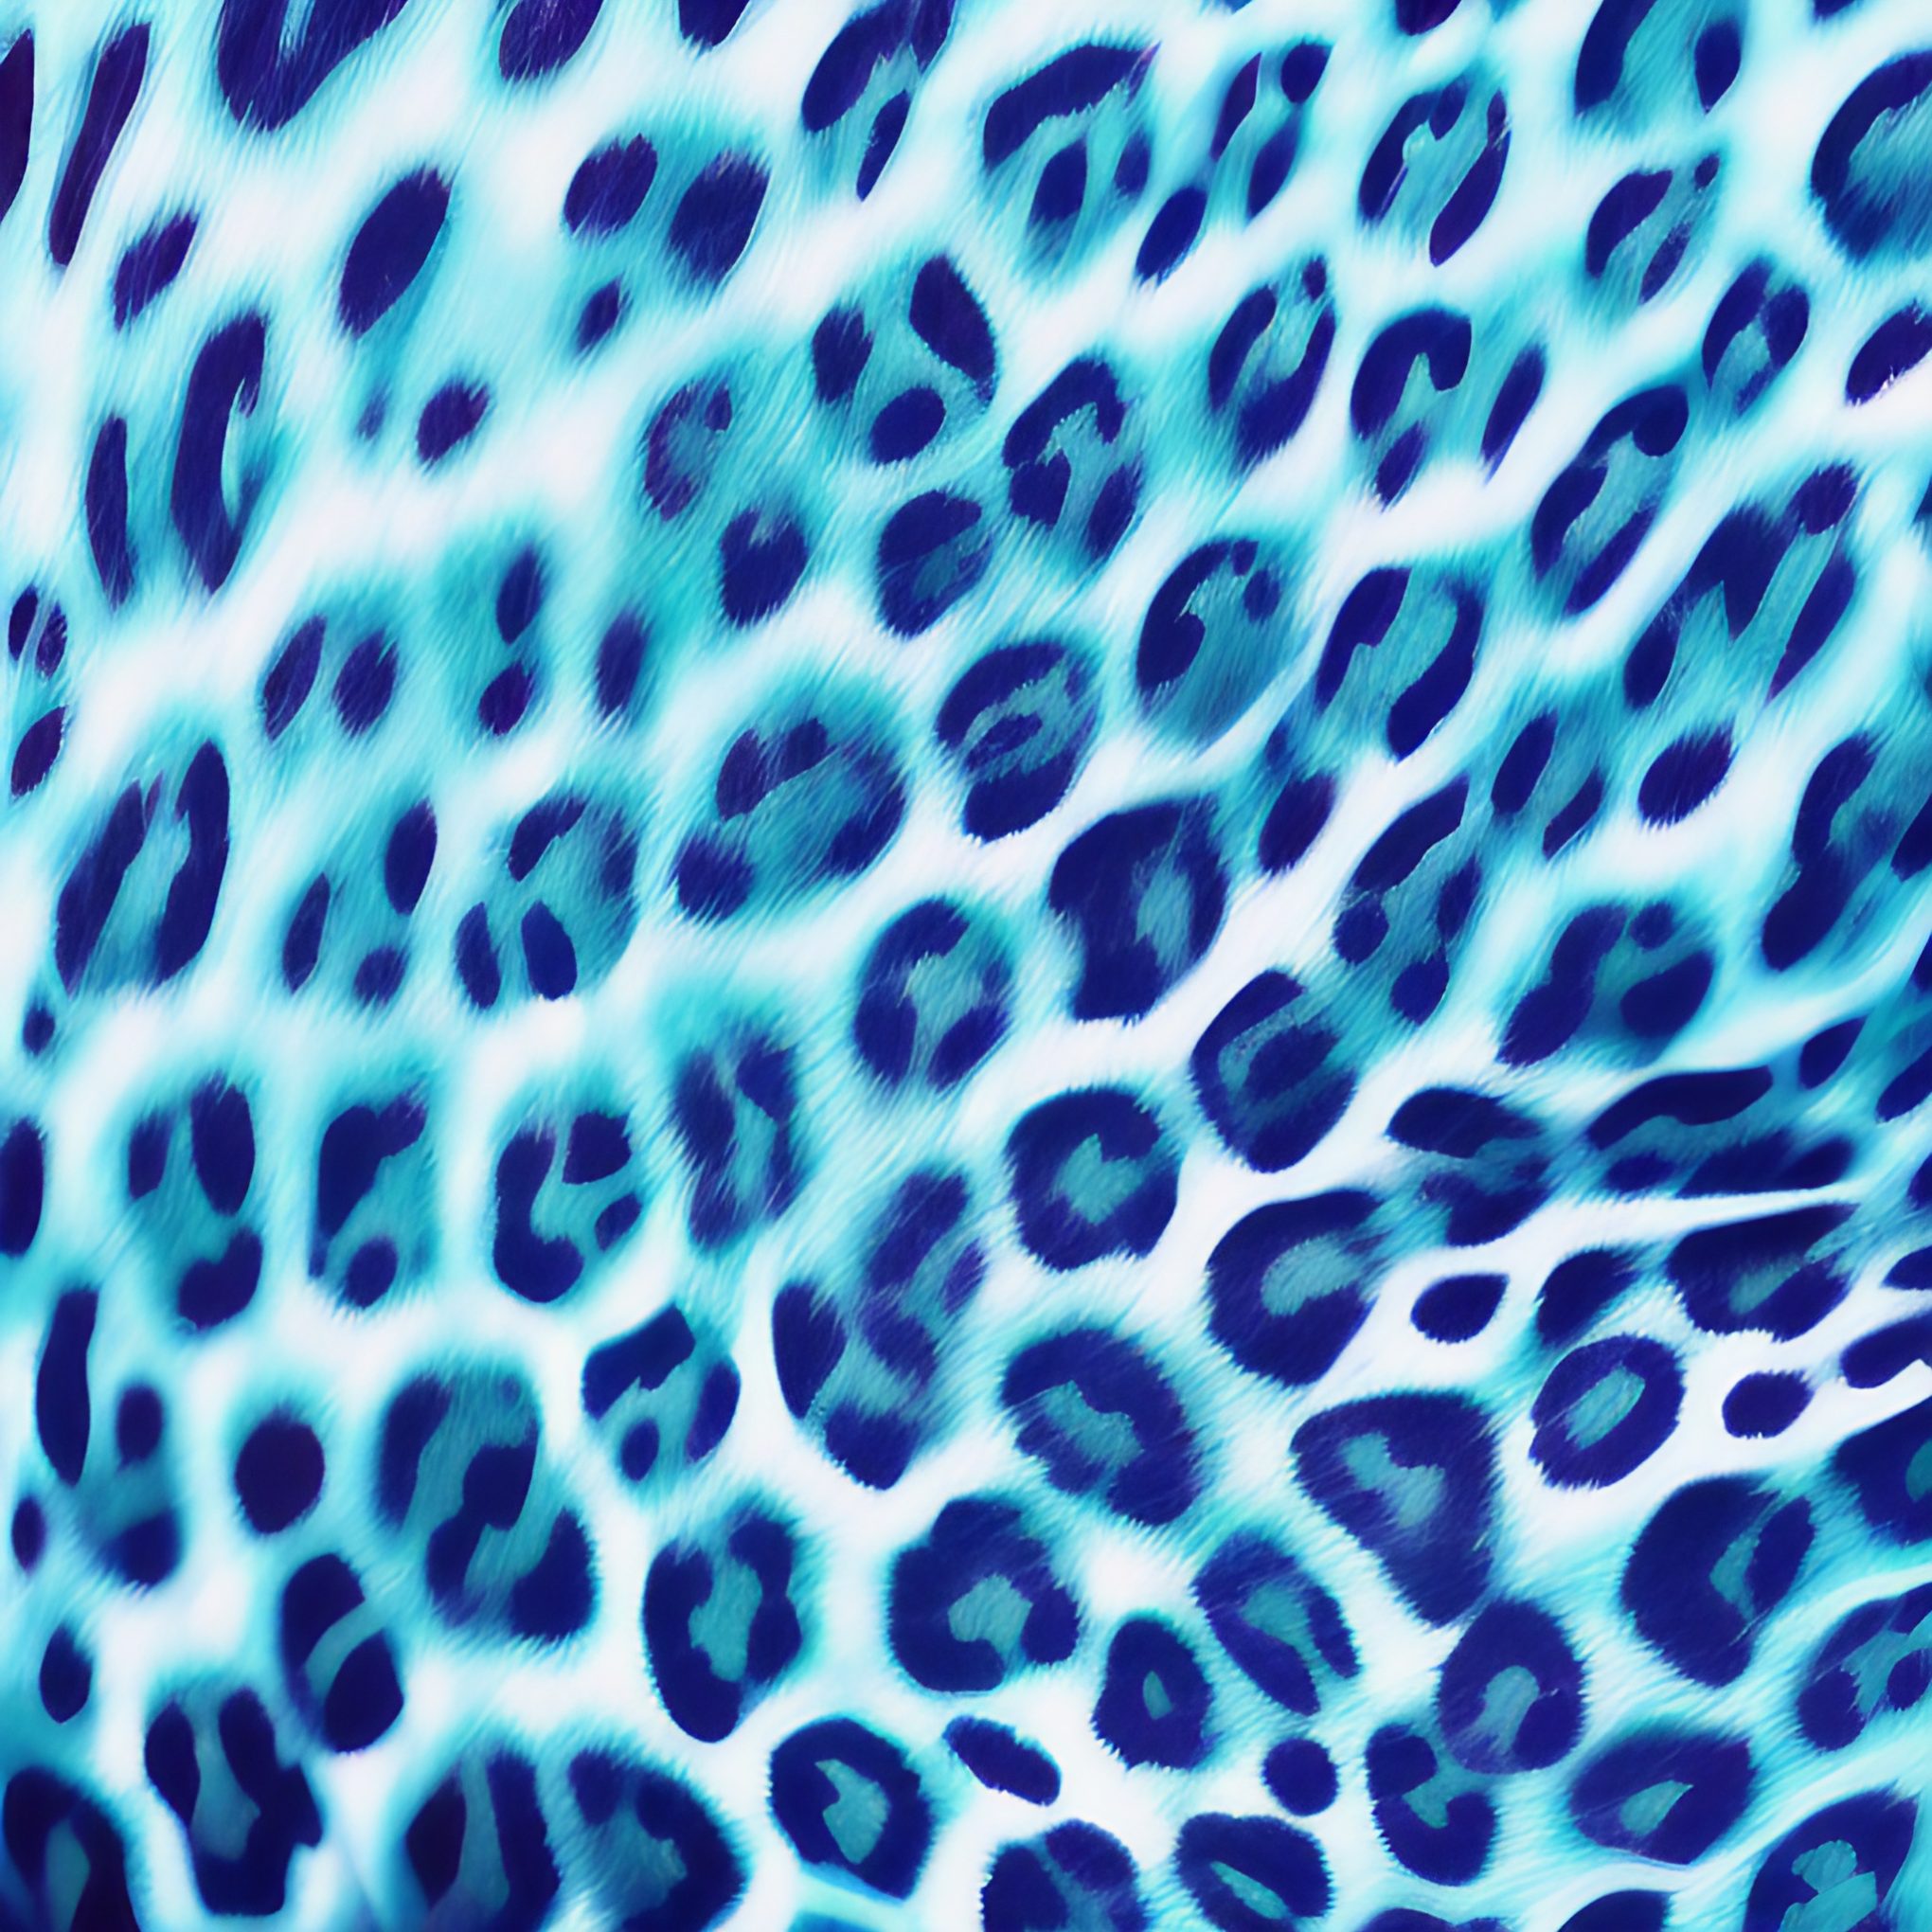 Bright Blue Cheetah Print Animal Fur Pattern Free Stock Image